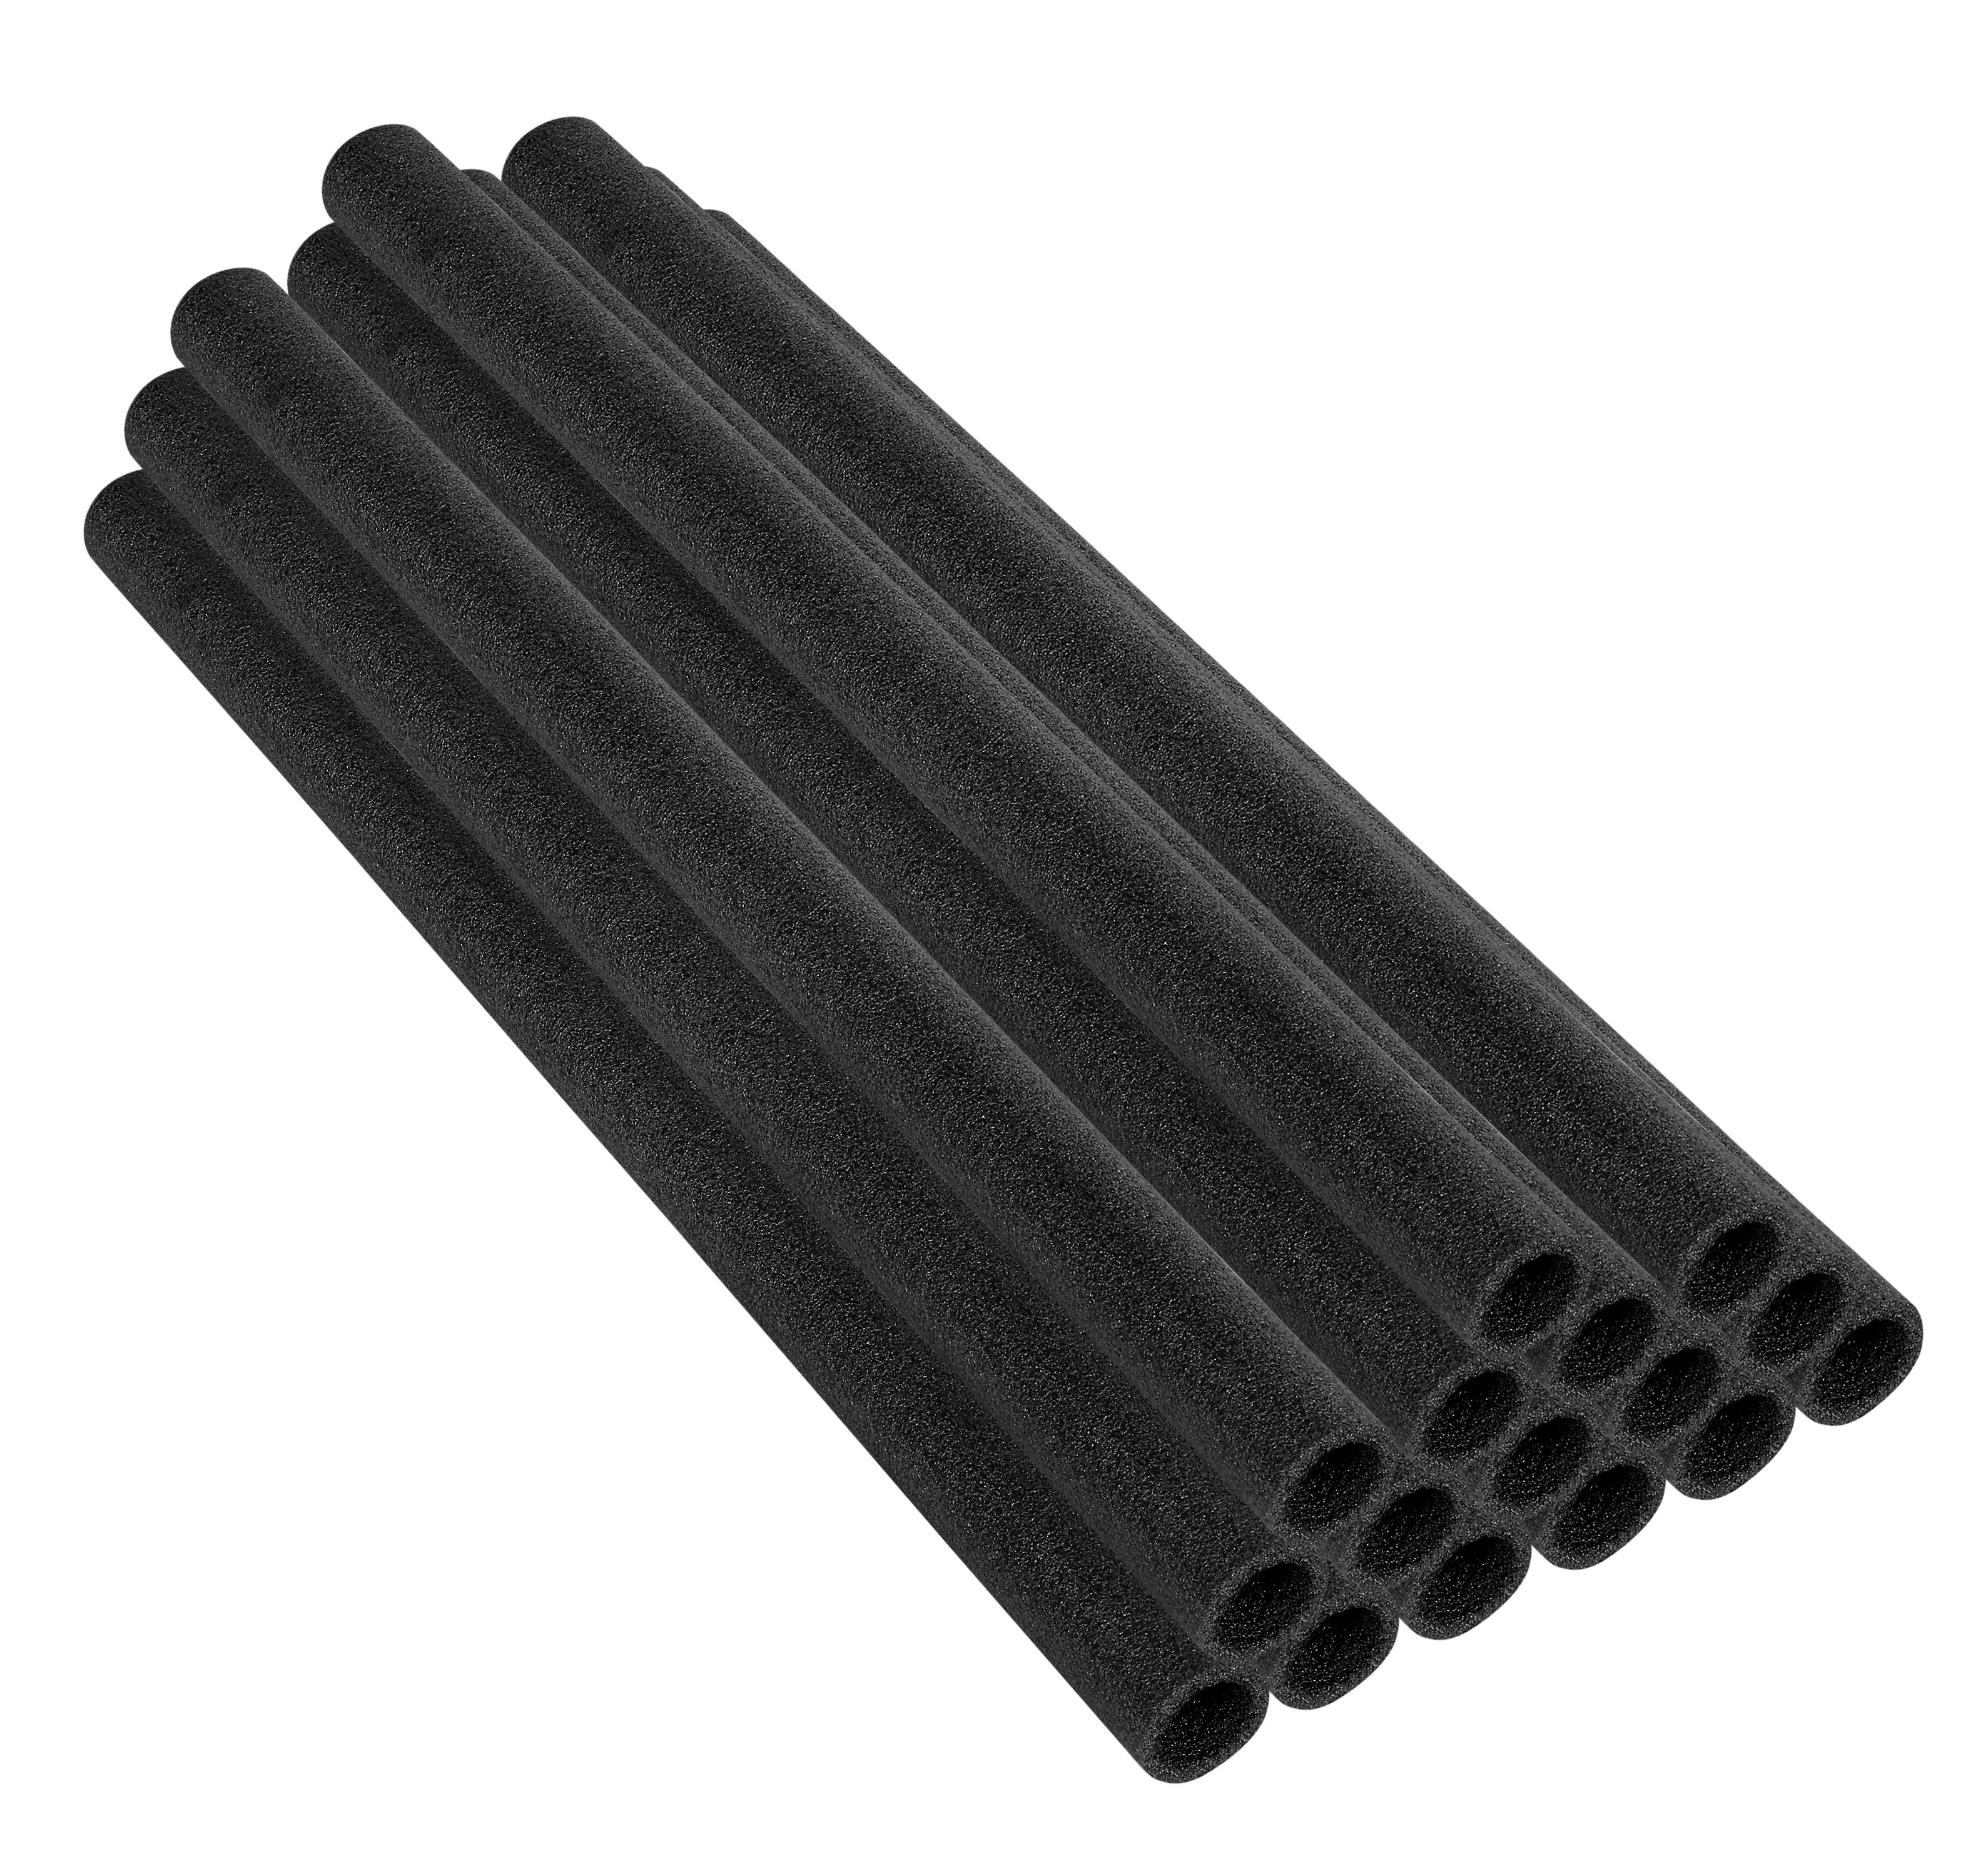 37 Inch Trampoline Pole Foam Sleeves, fits for 1" Diameter Pole - Set of 16 - Black